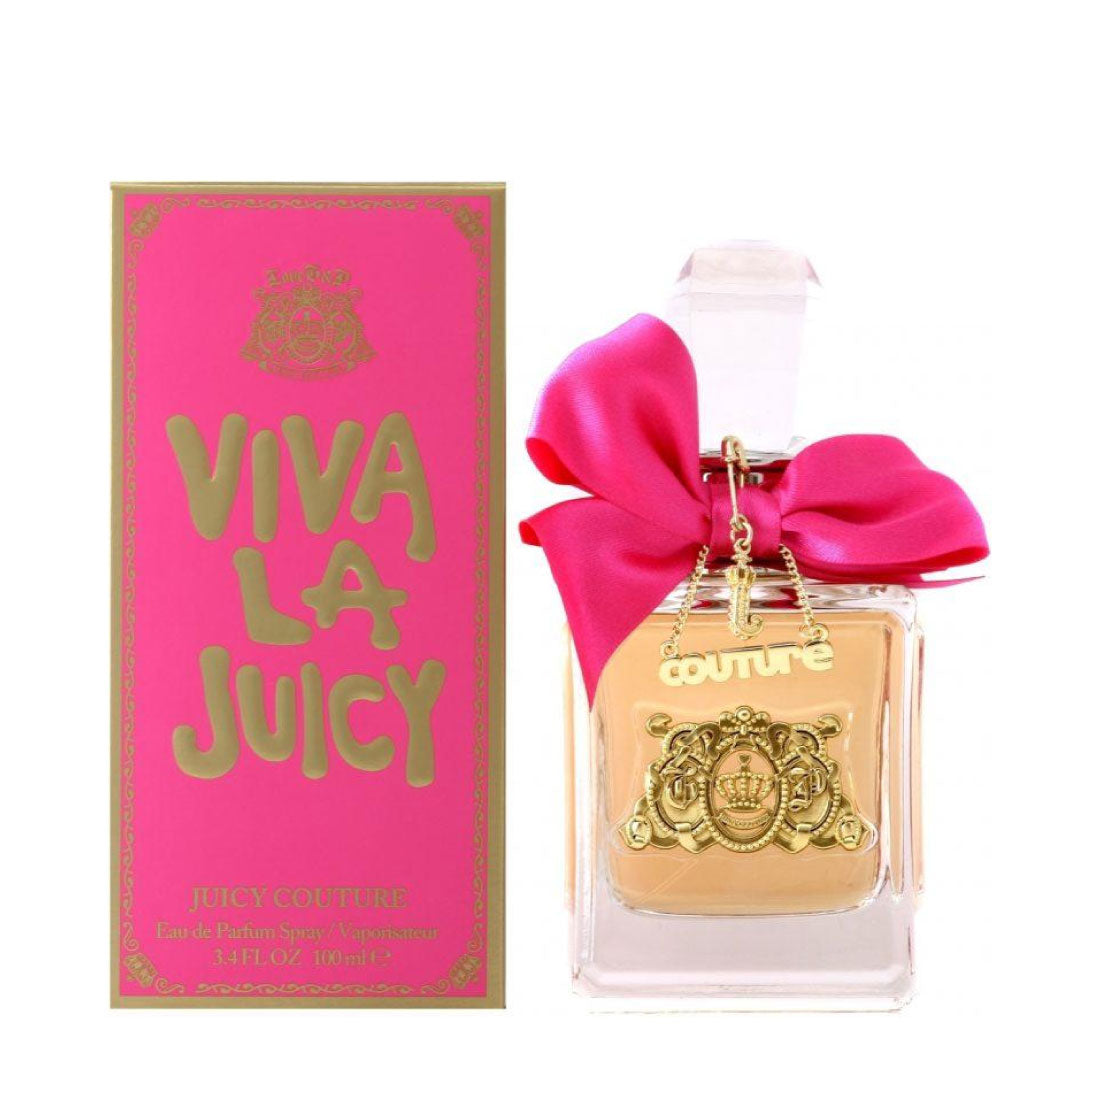 Bad Girl Pink by 3.4 oz Eau de Parfum Spray New in Box for Women